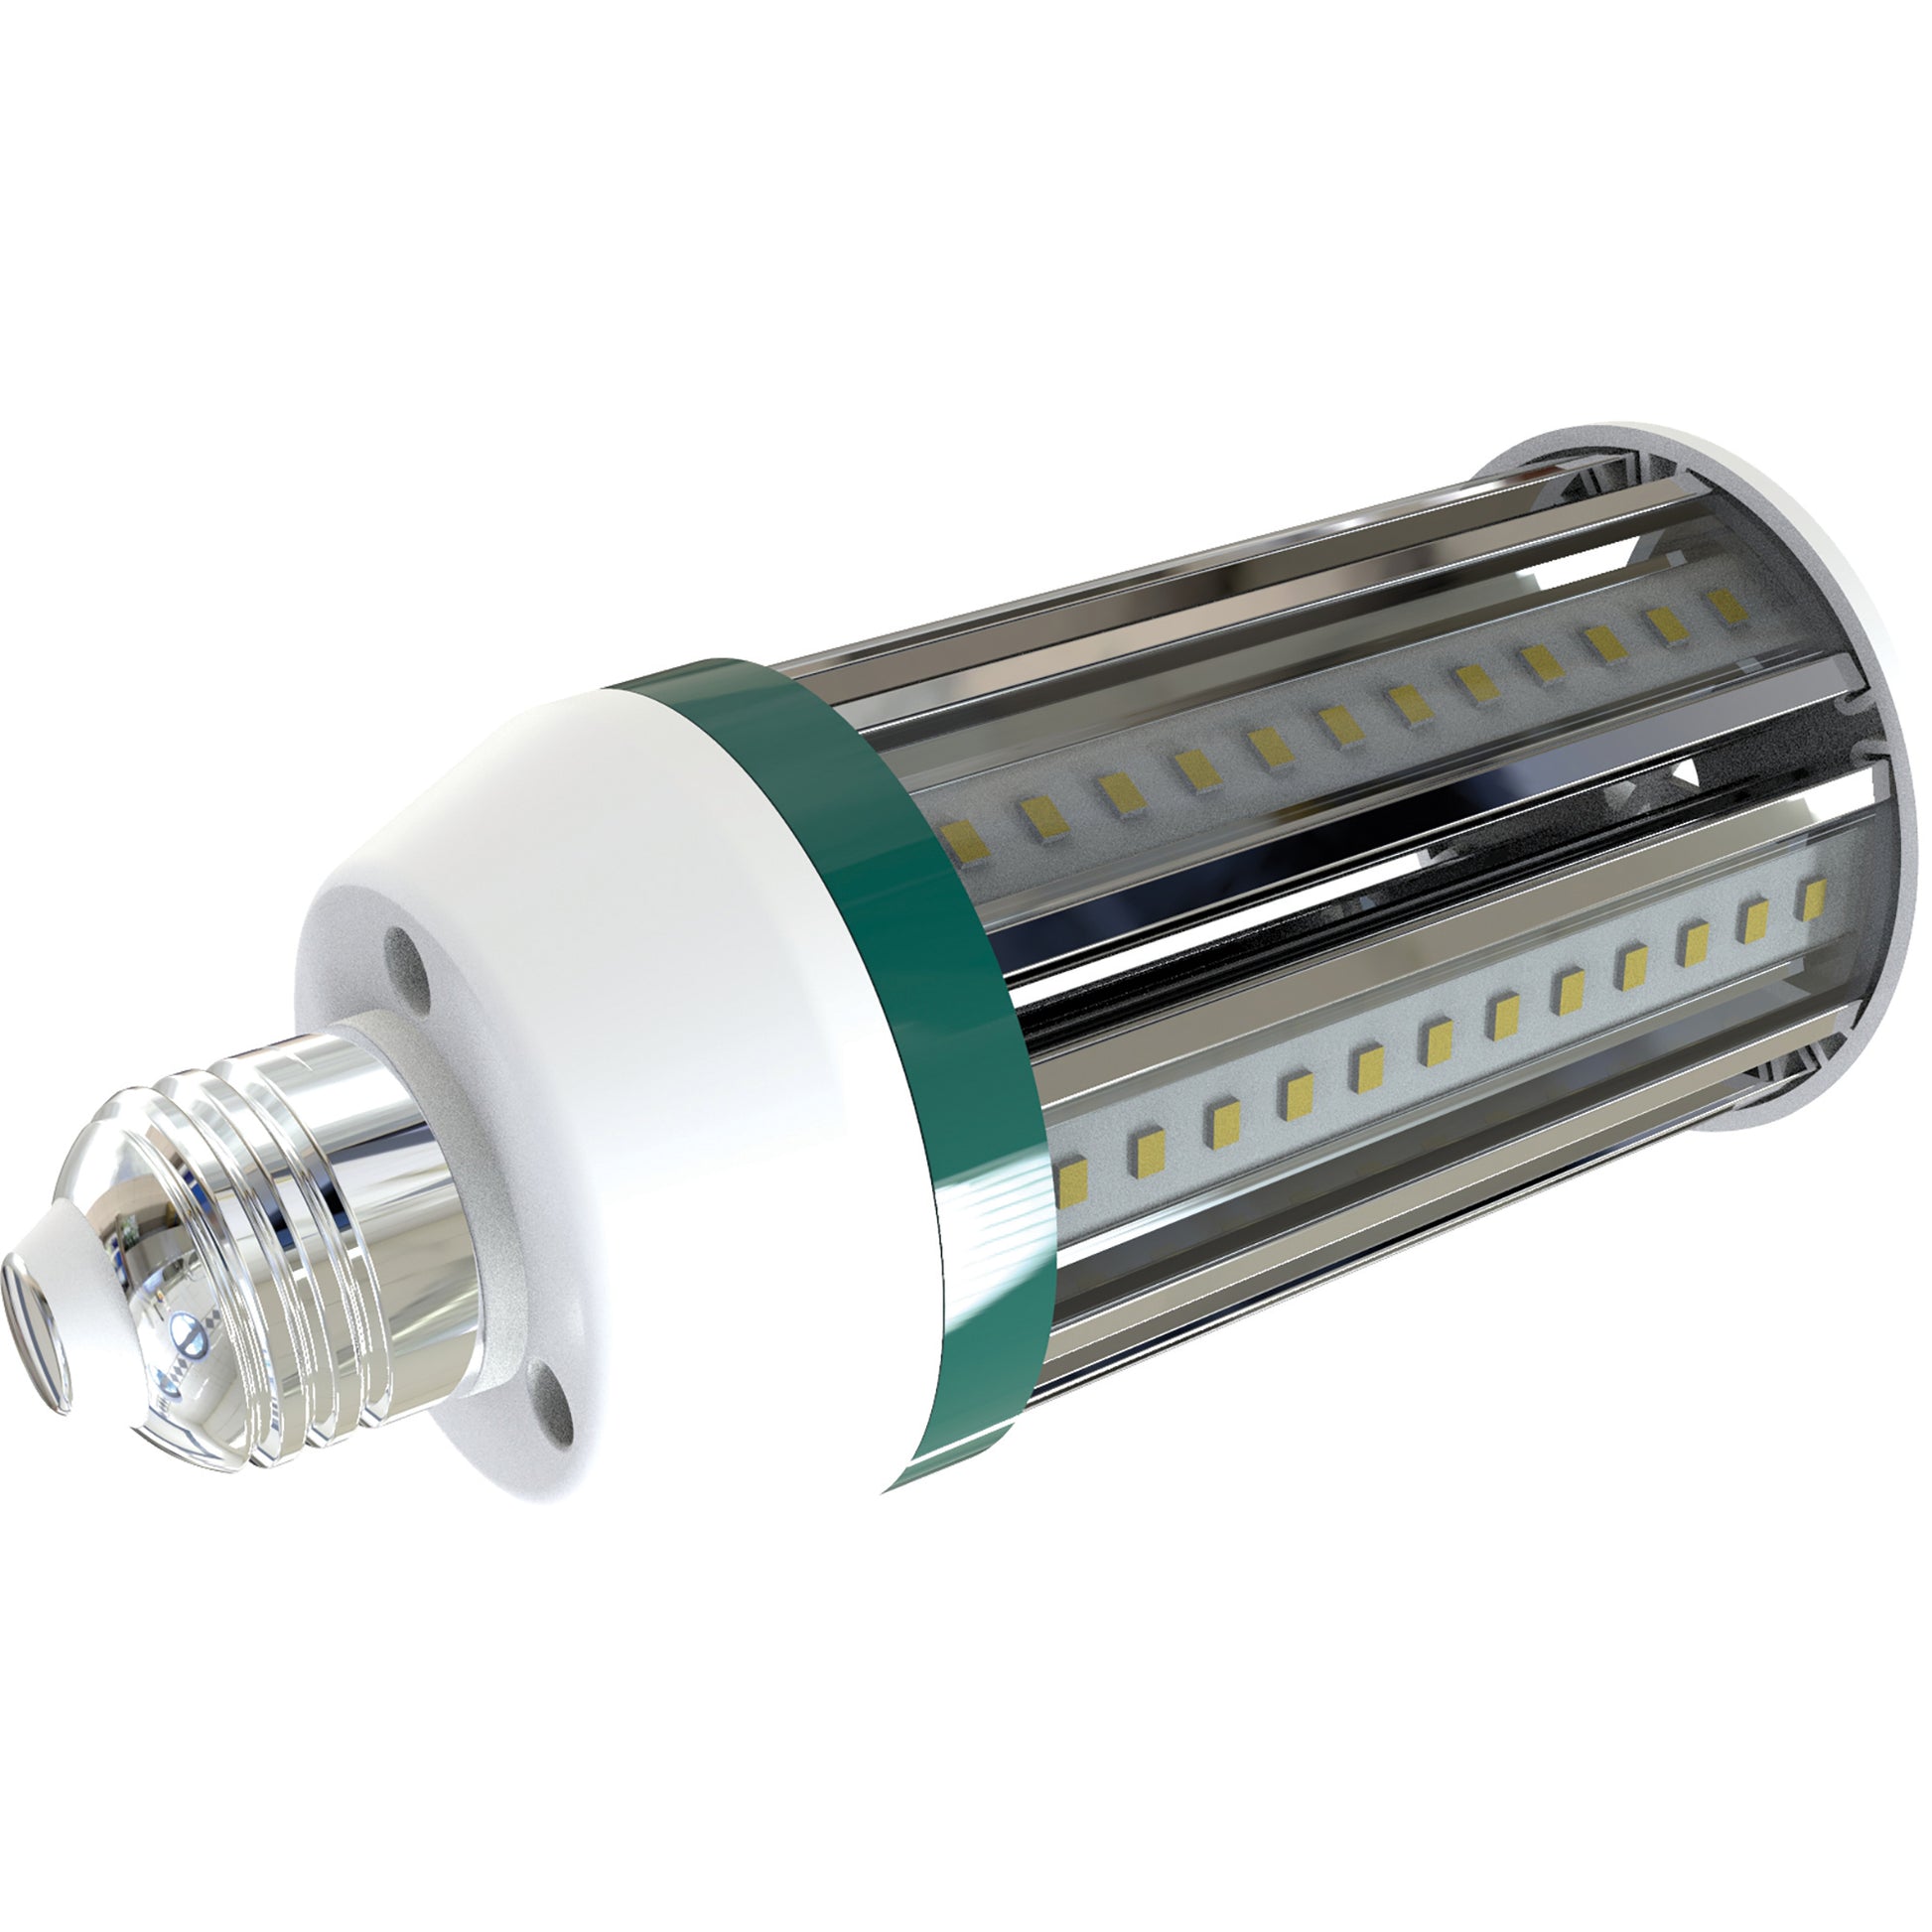 Pinegreen Lighting 12000 Lumen LED 4-Panel Garage Bulb - CL-BU-G120